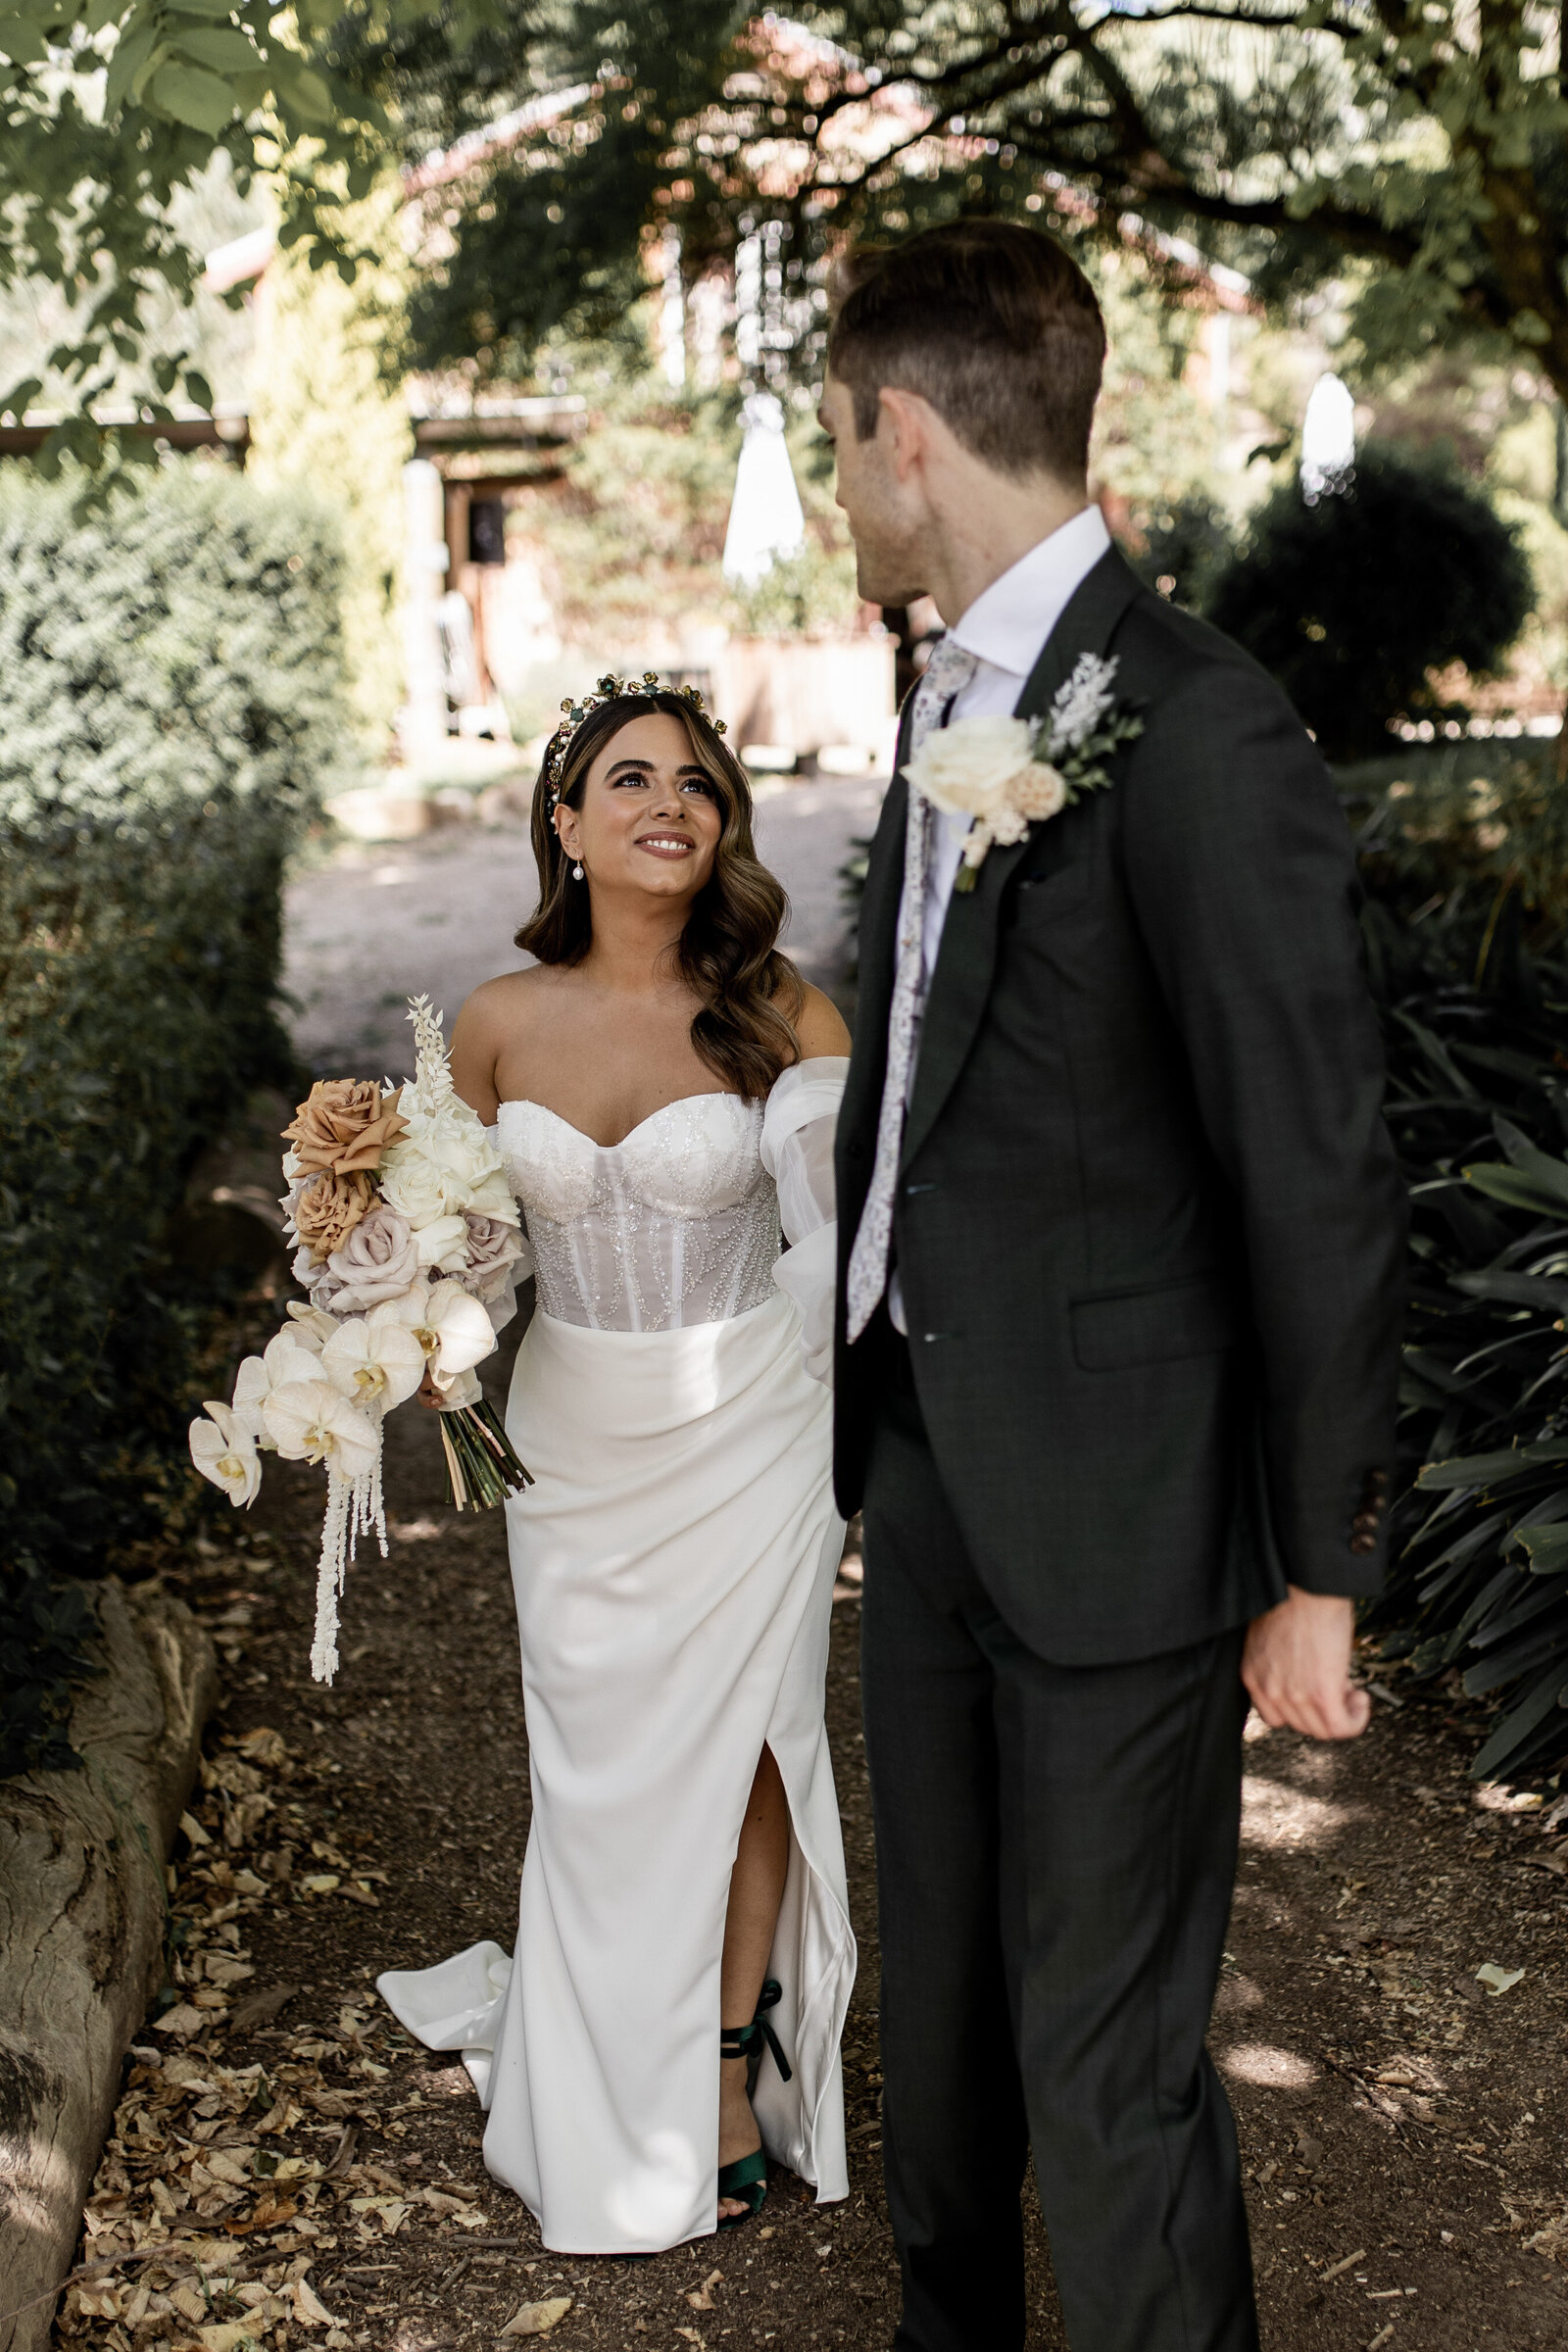 Parmida-Charlie-Adelaide-Wedding-Photographer-Rexvil-Photography-257